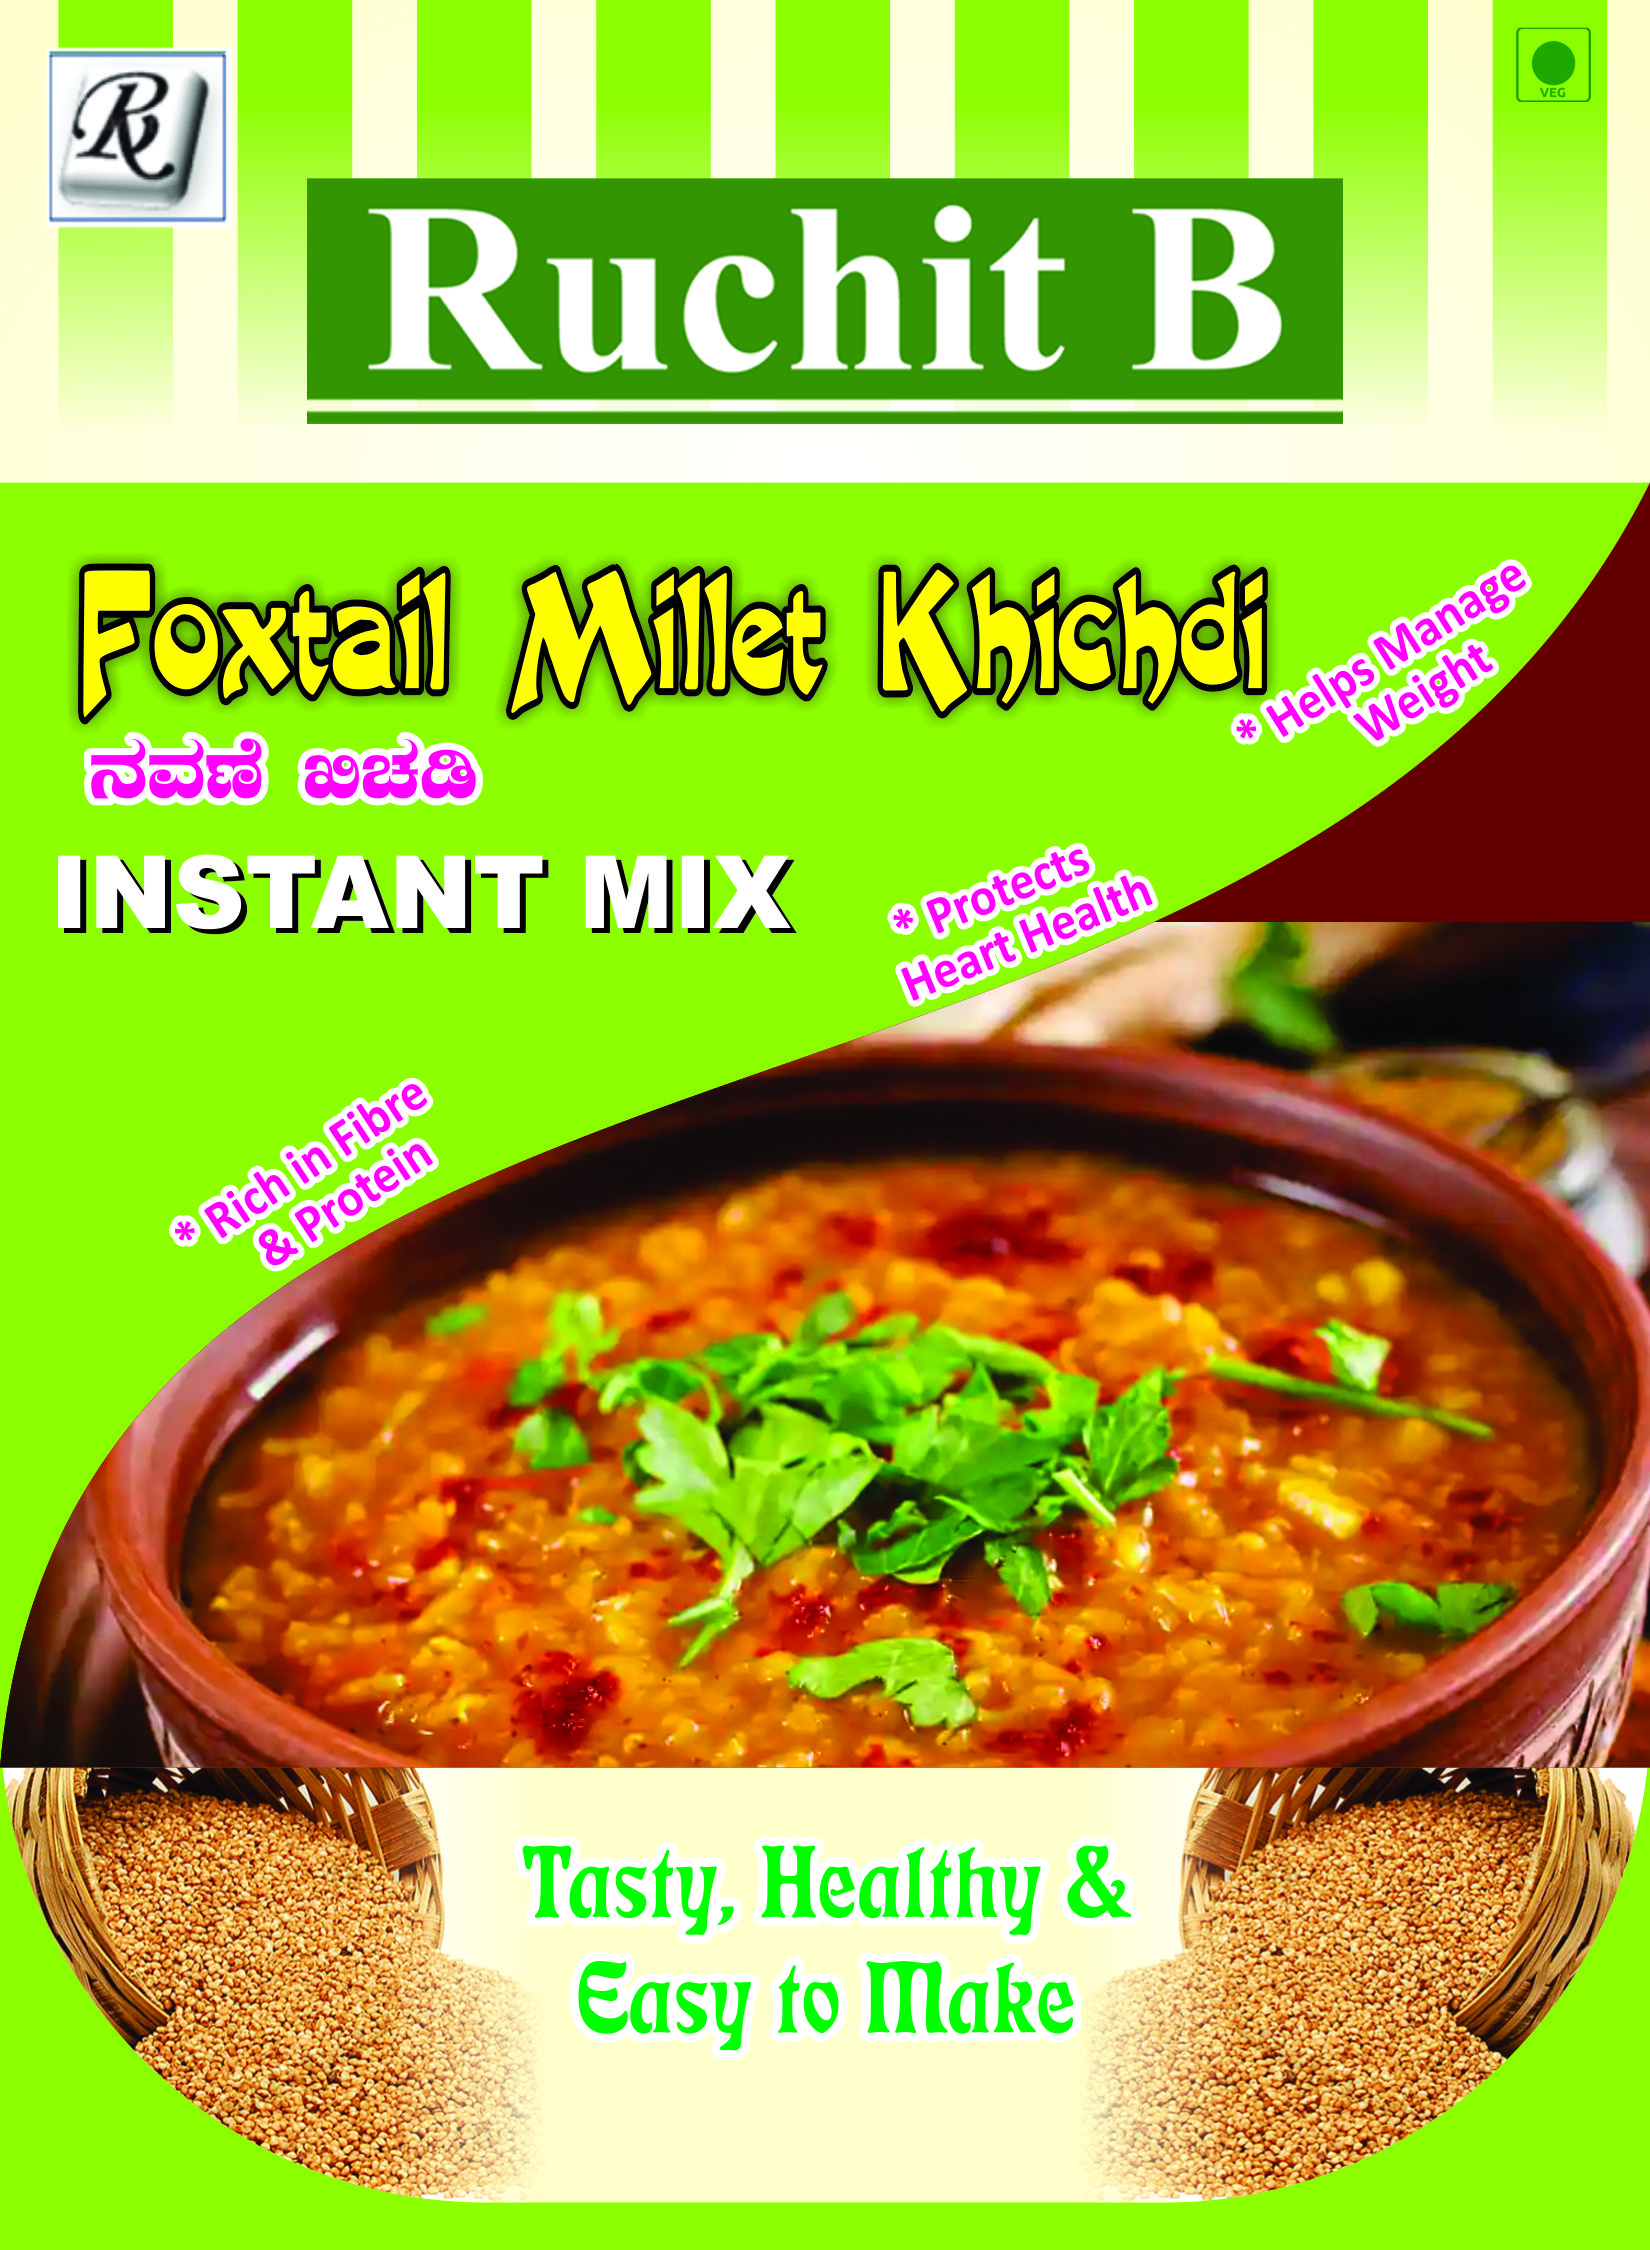 Foxtail Millet Kichdi